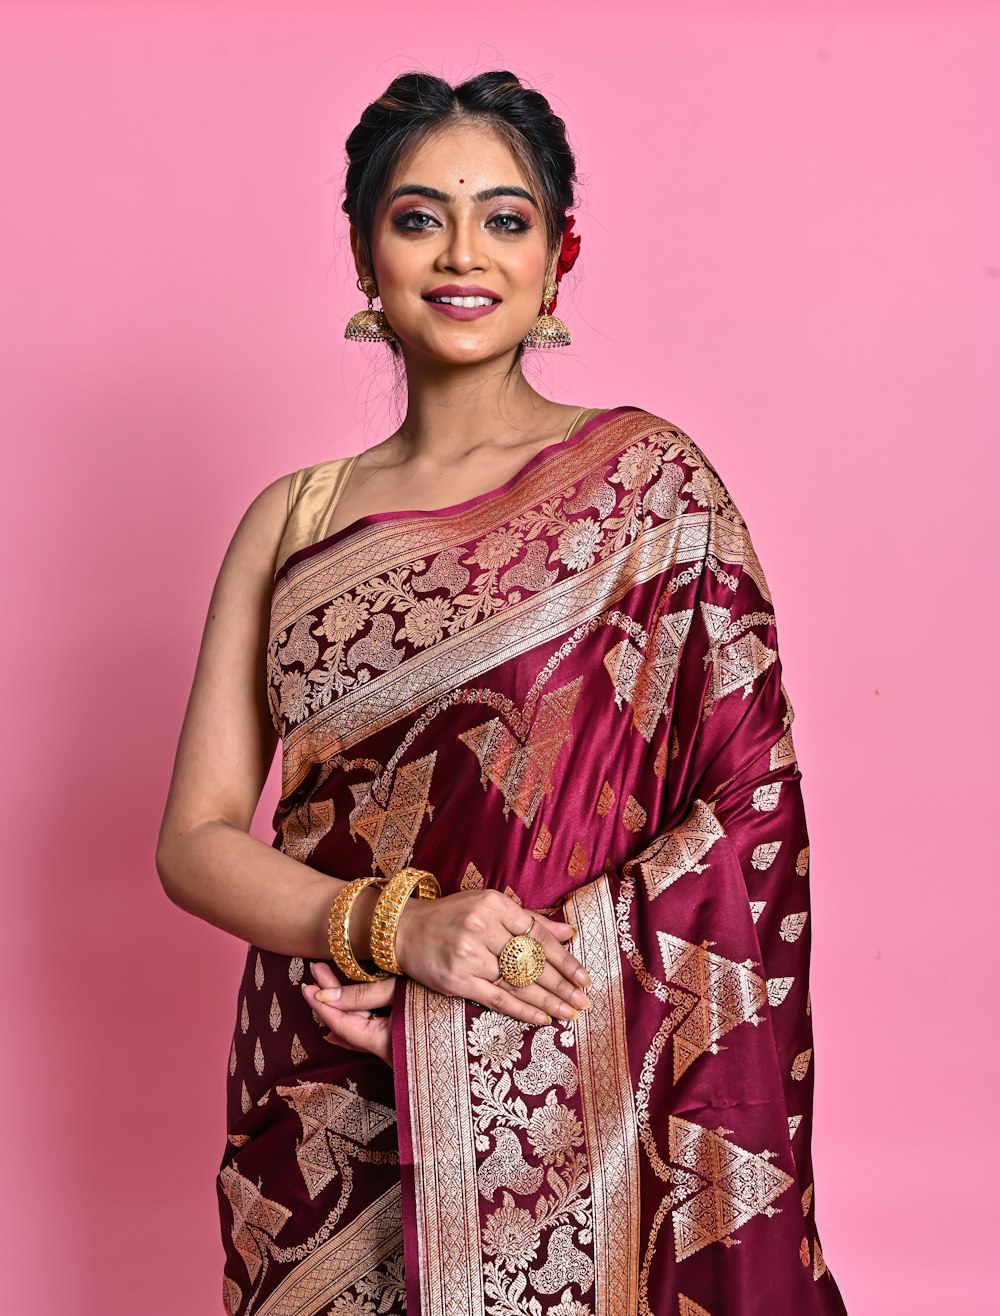 a woman wearing a maroon and gold sari